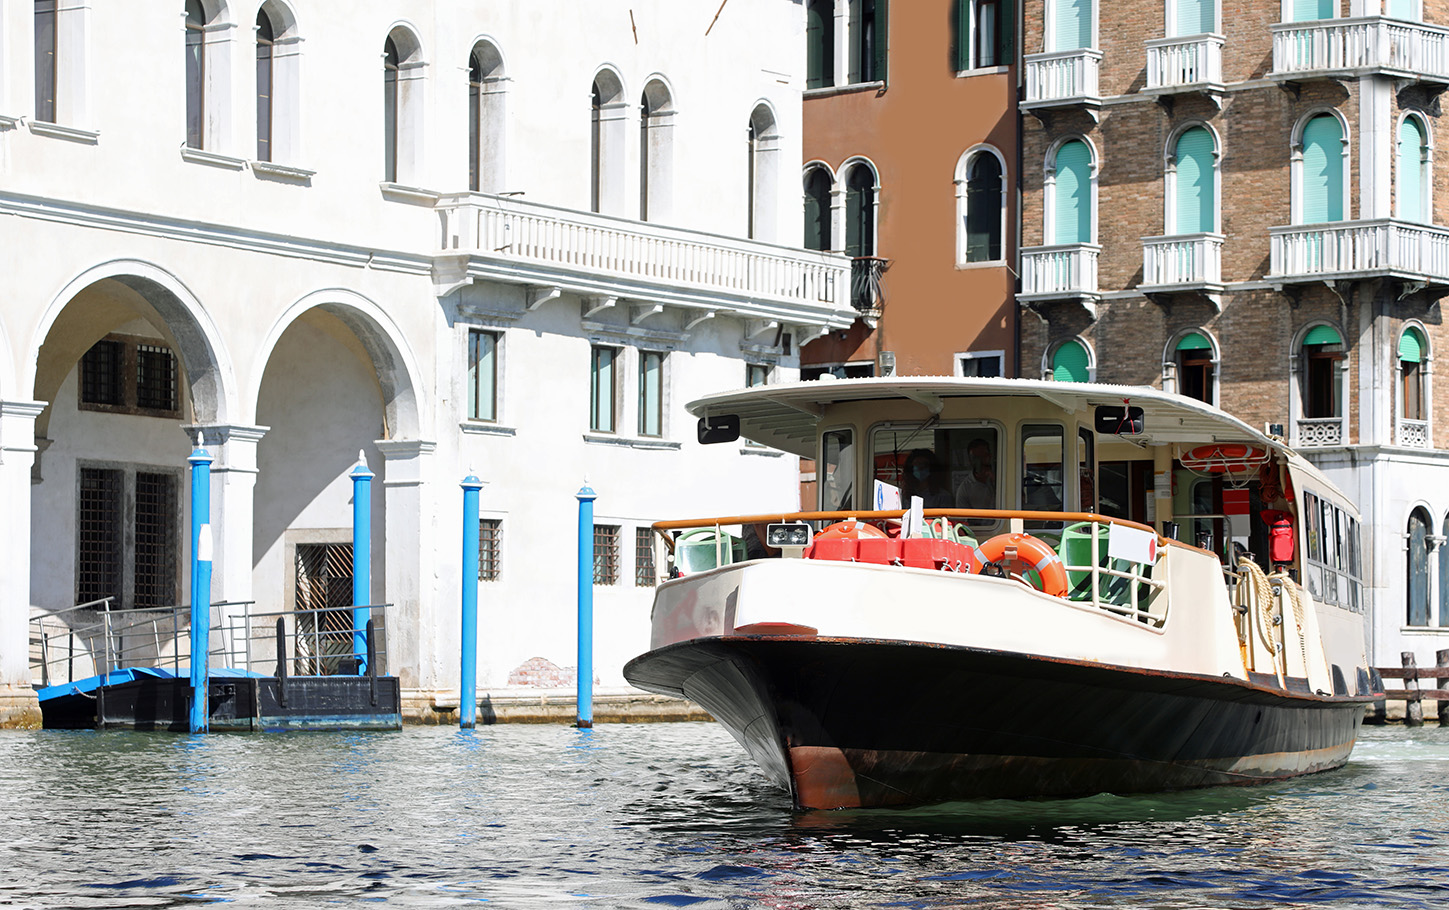 Public boat in Venice